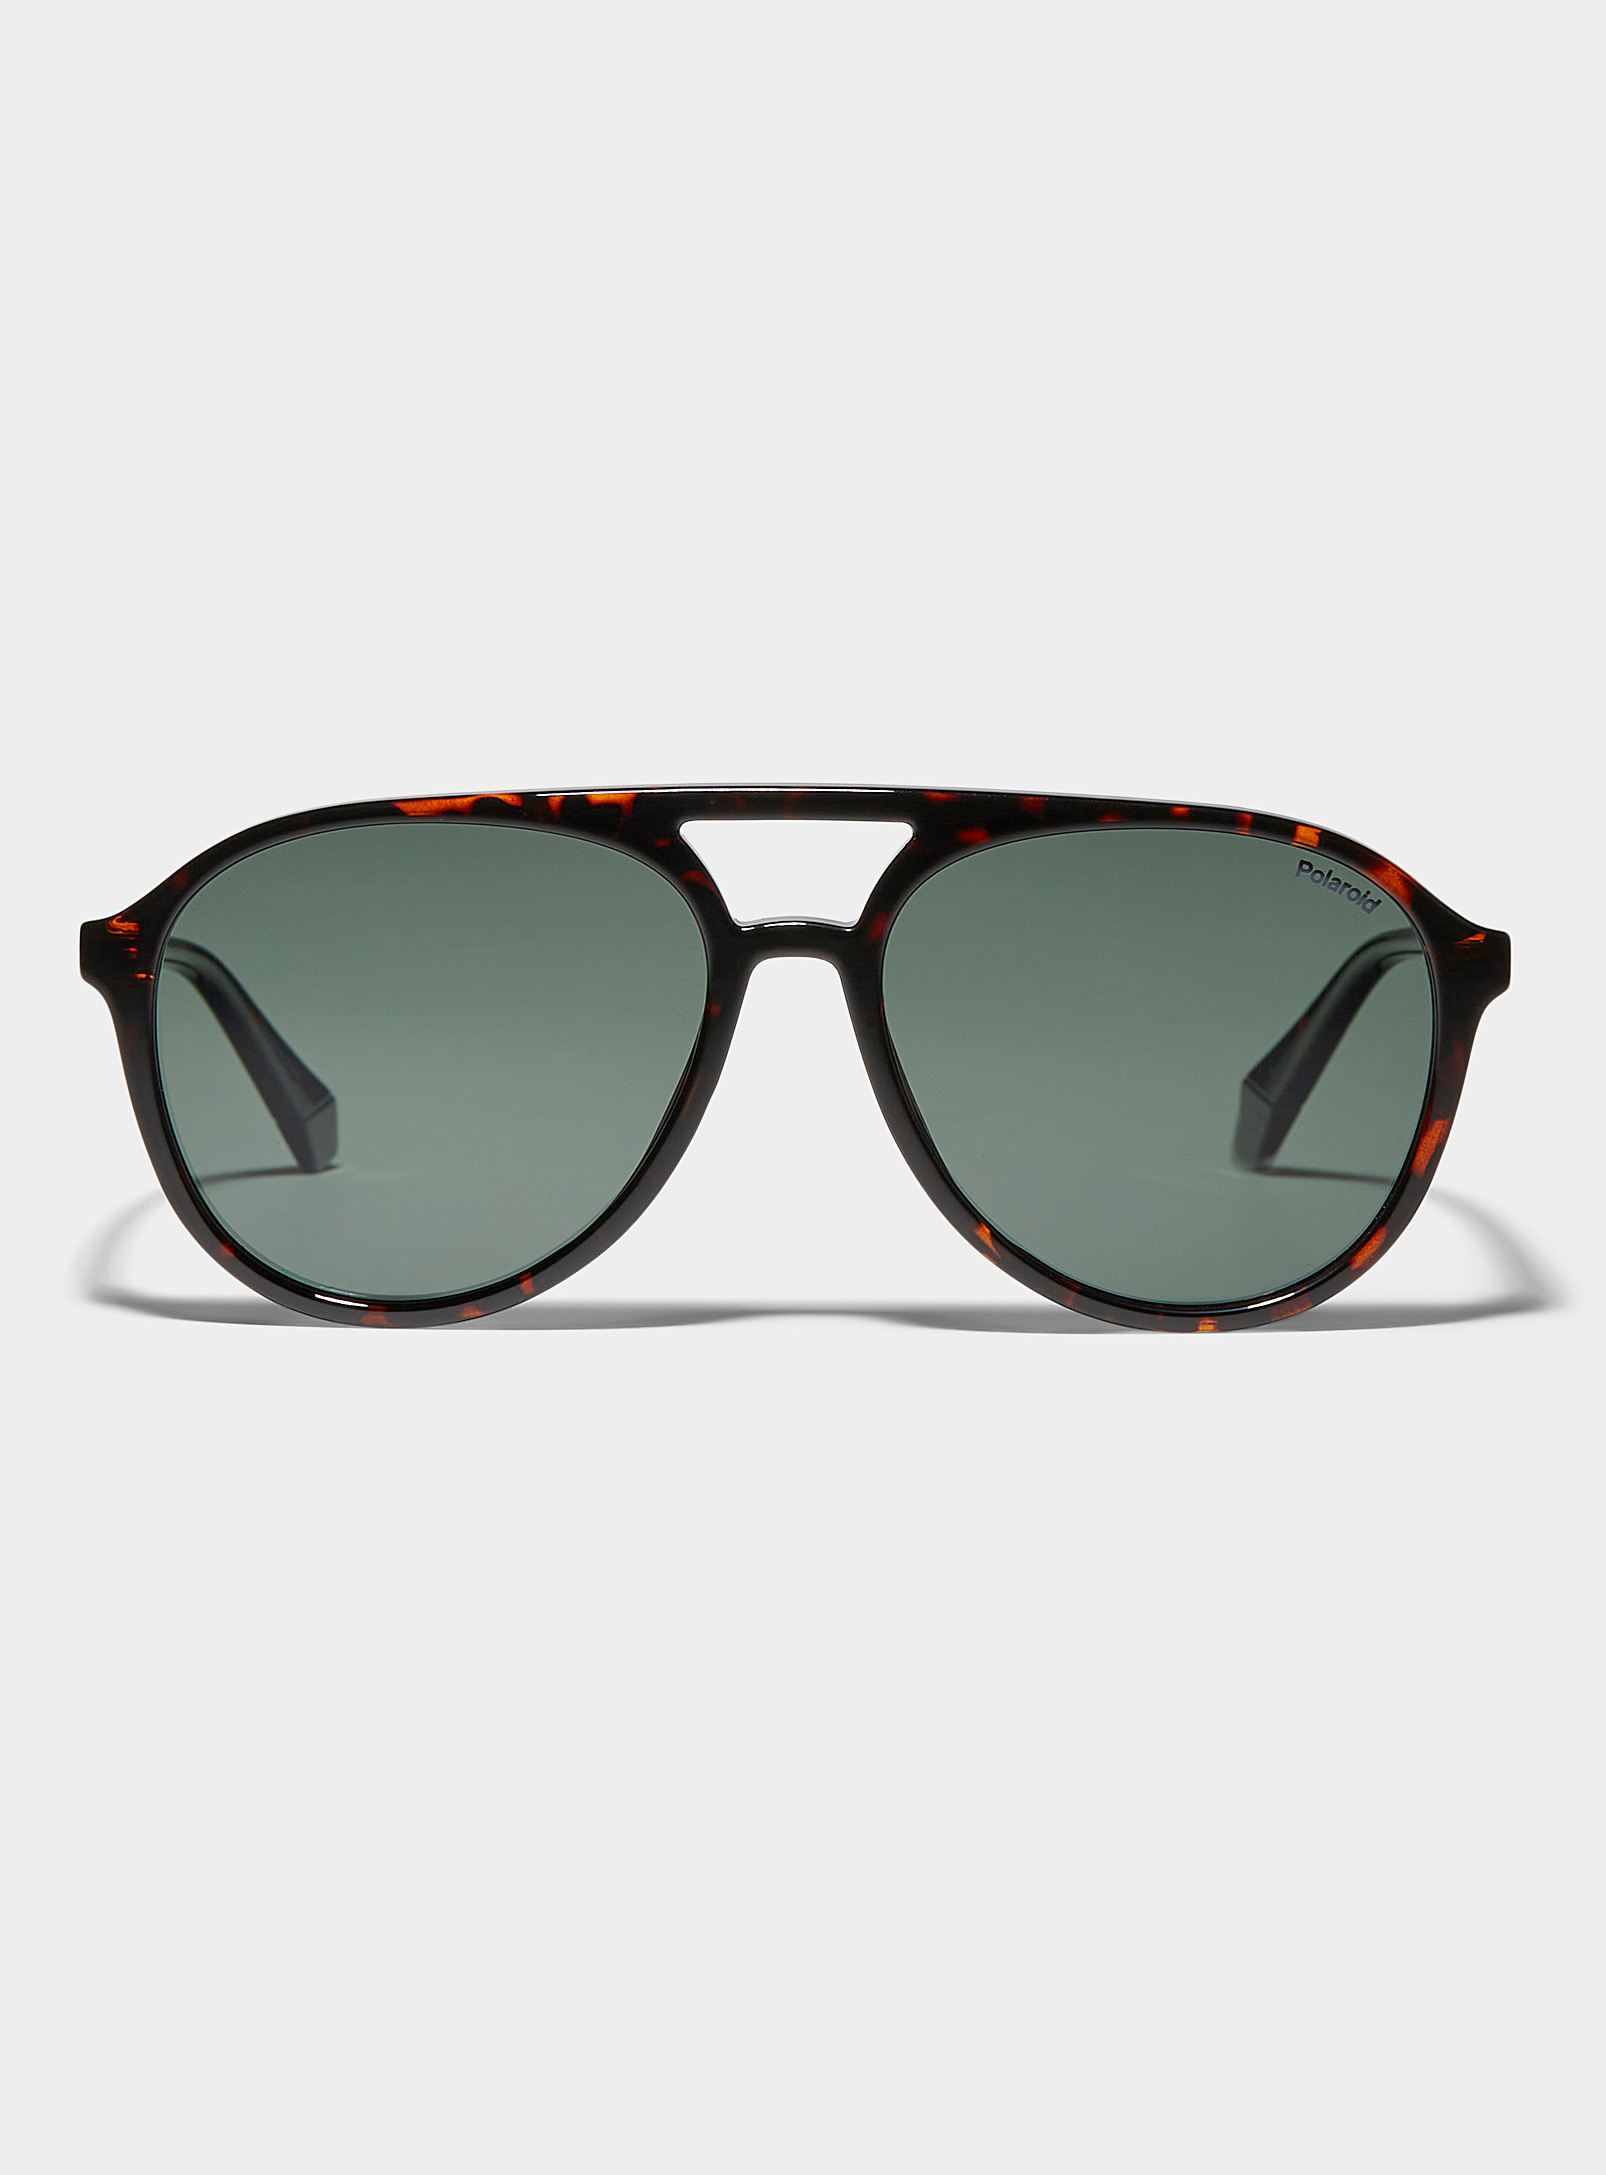 Polaroid - Women's Turtle shell aviator sunglasses